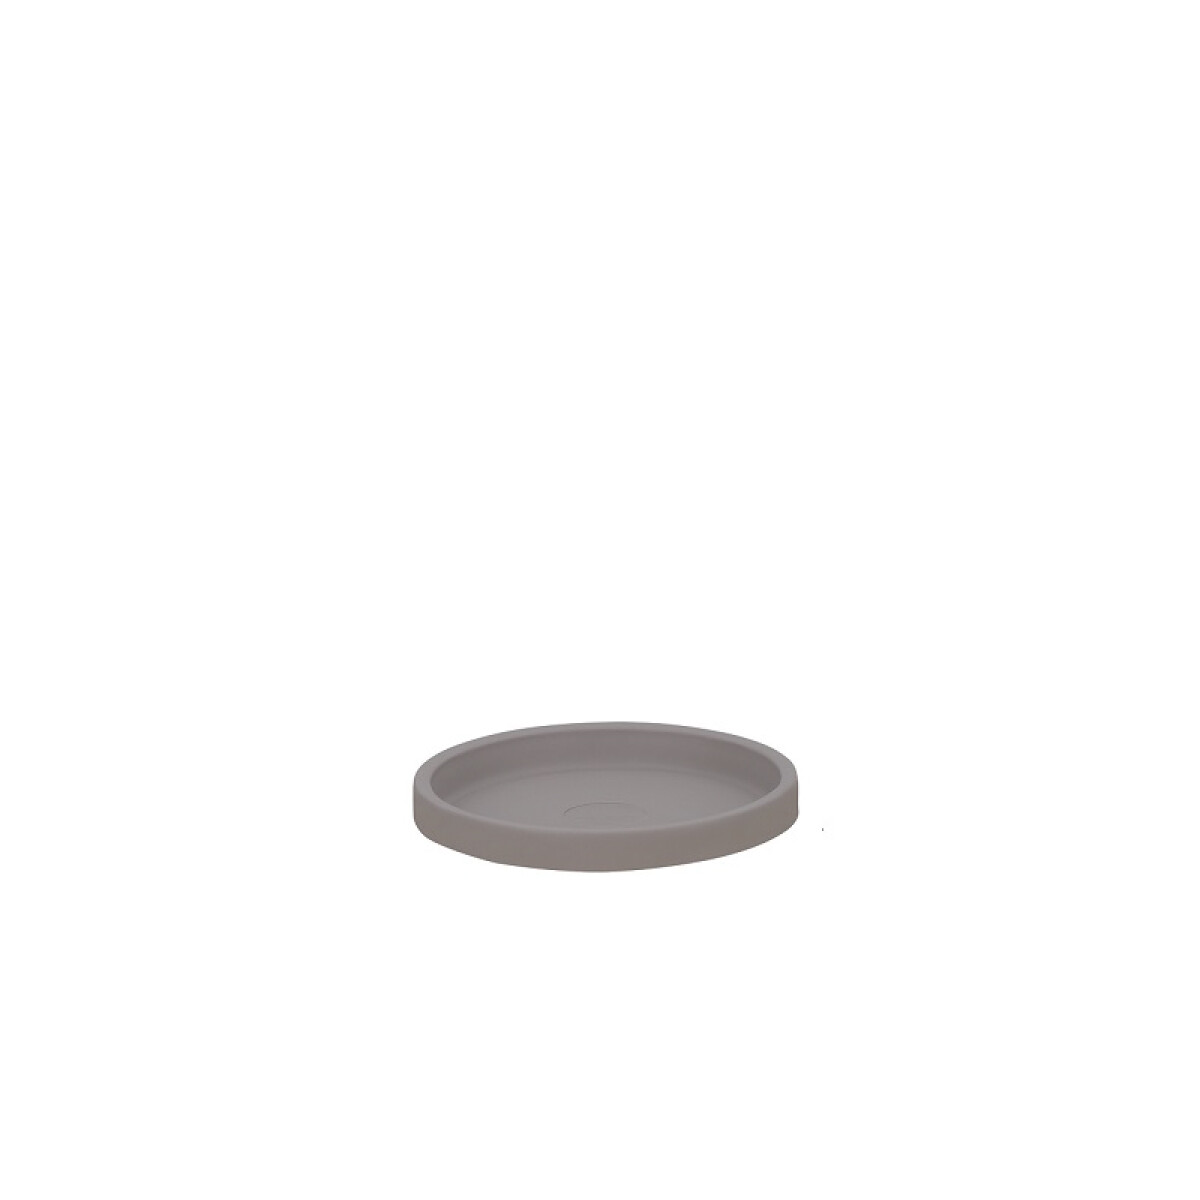 Plato para maceta simil cemento tamaño "P" - TD0374 